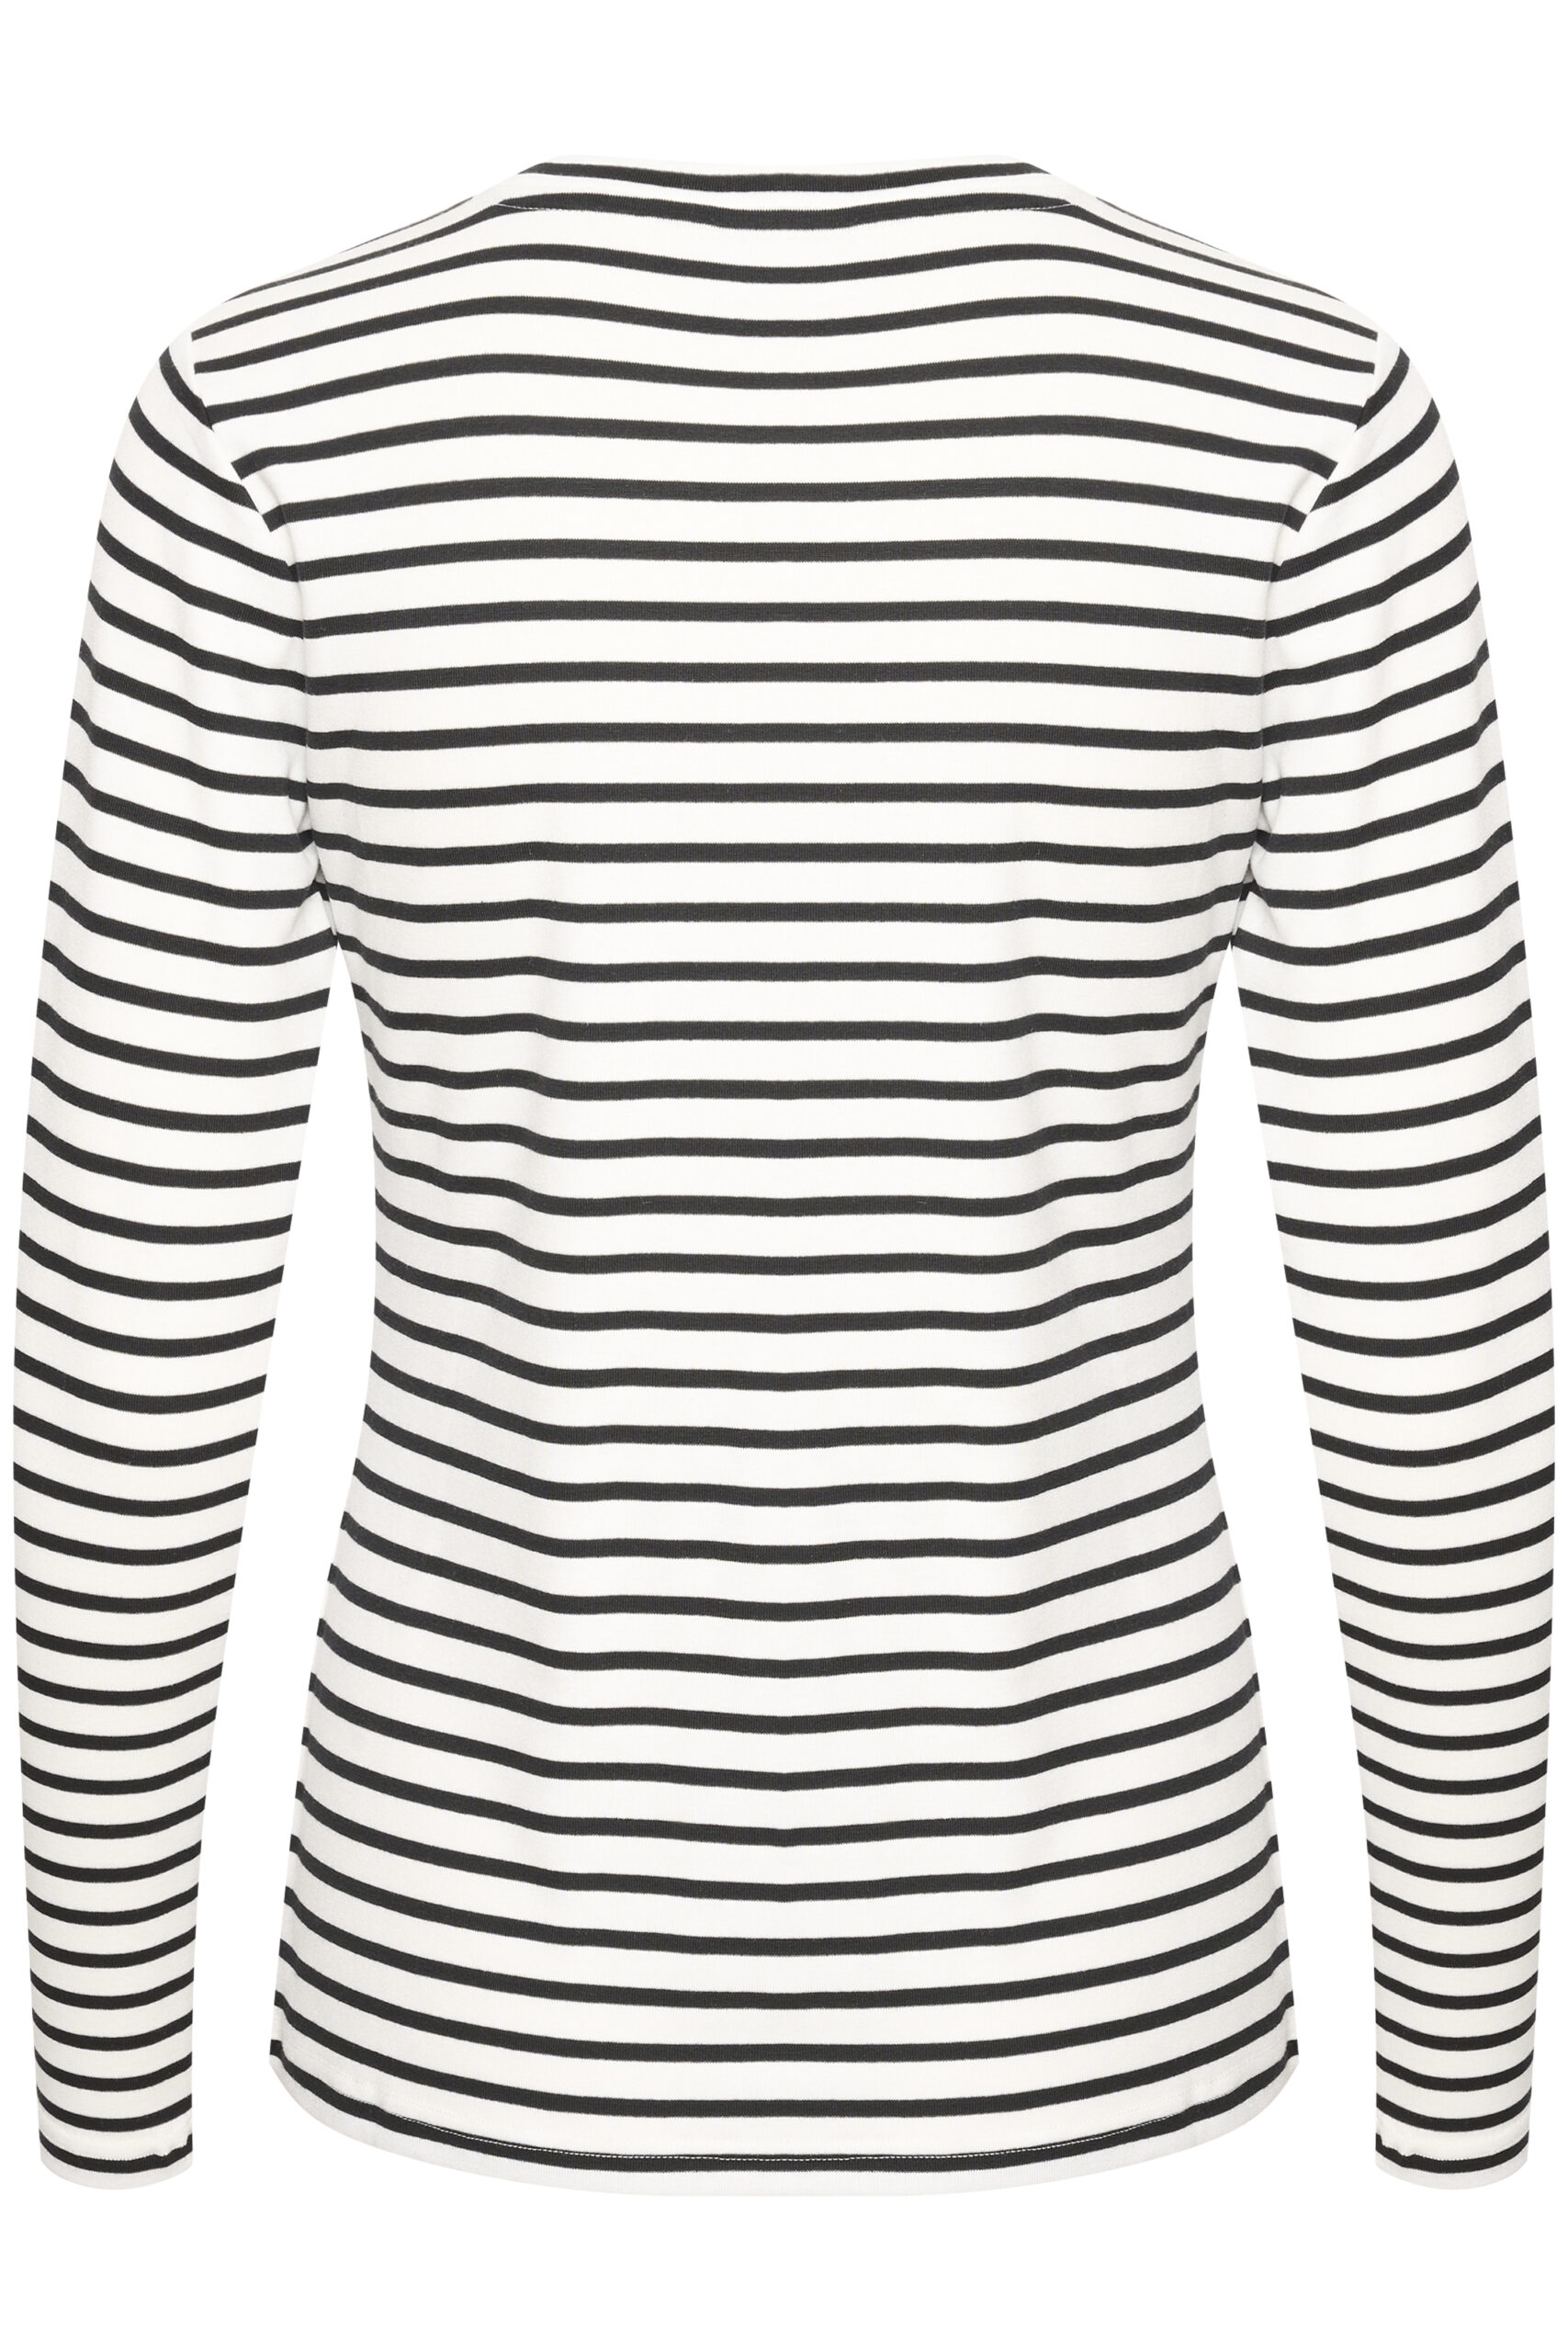 KAliddy Black Stripe T-shirt item back